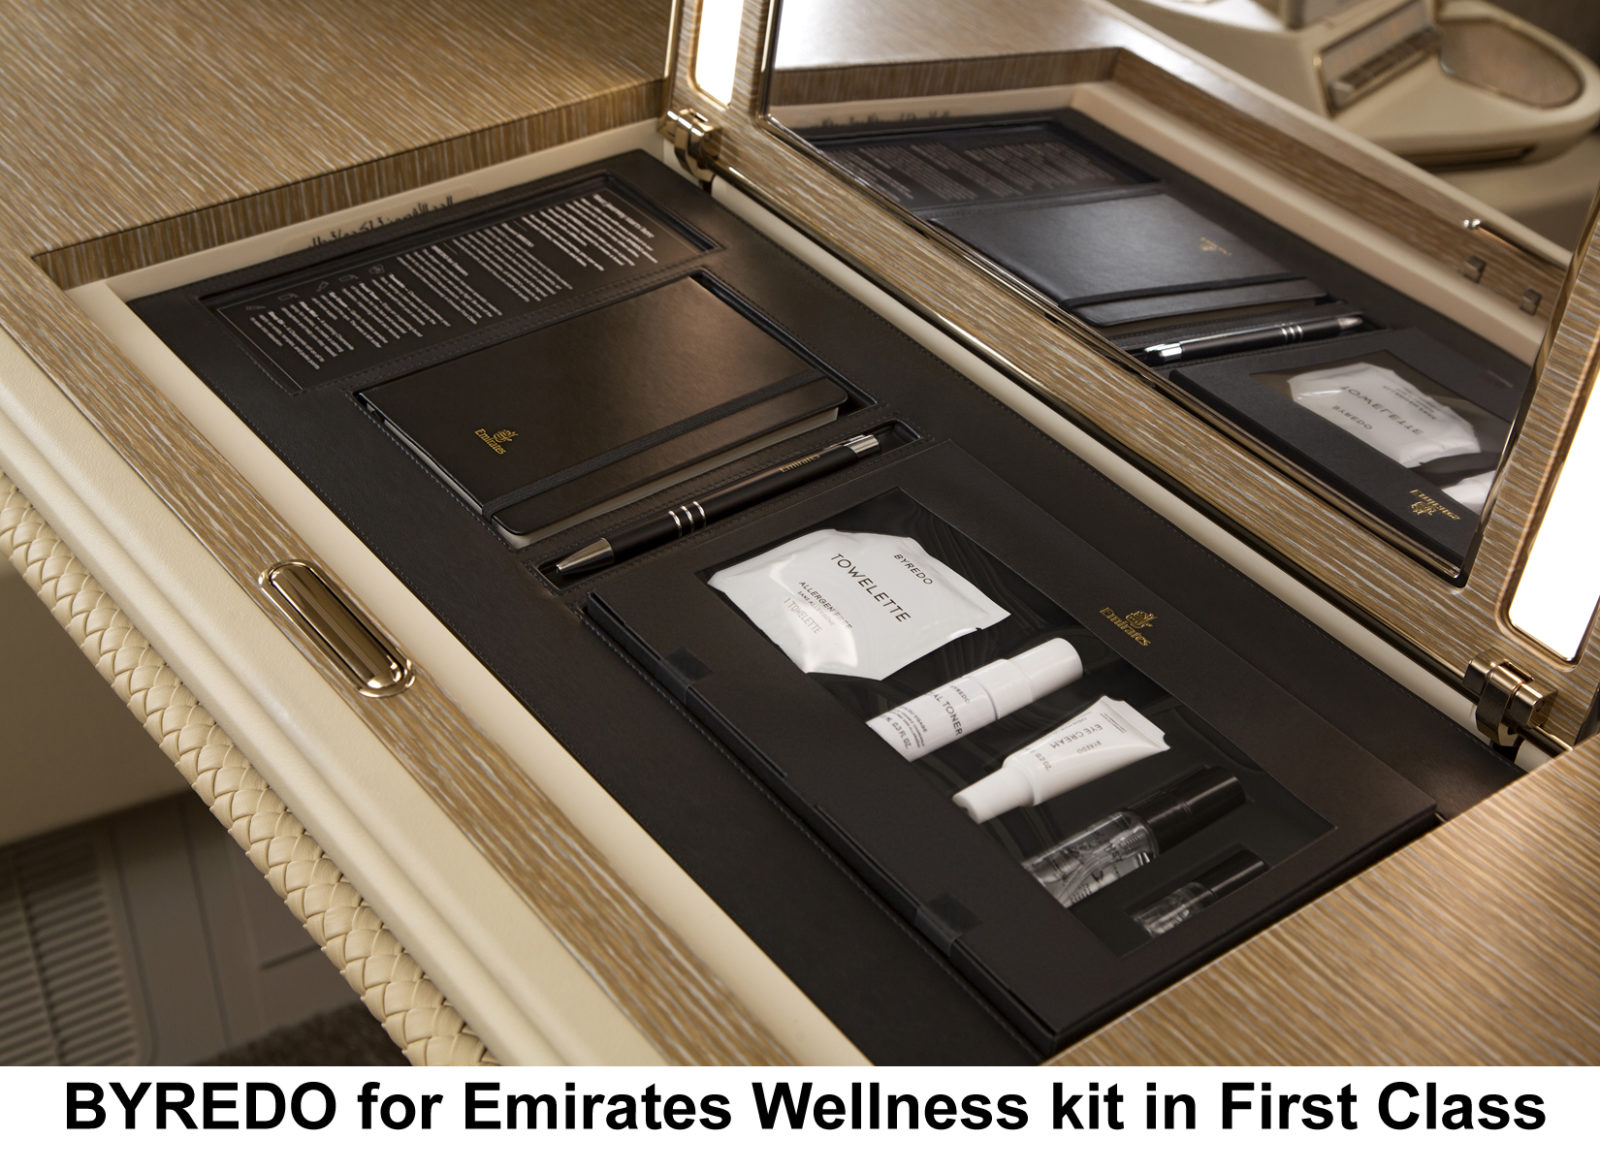 Emirates wellness kit in first class